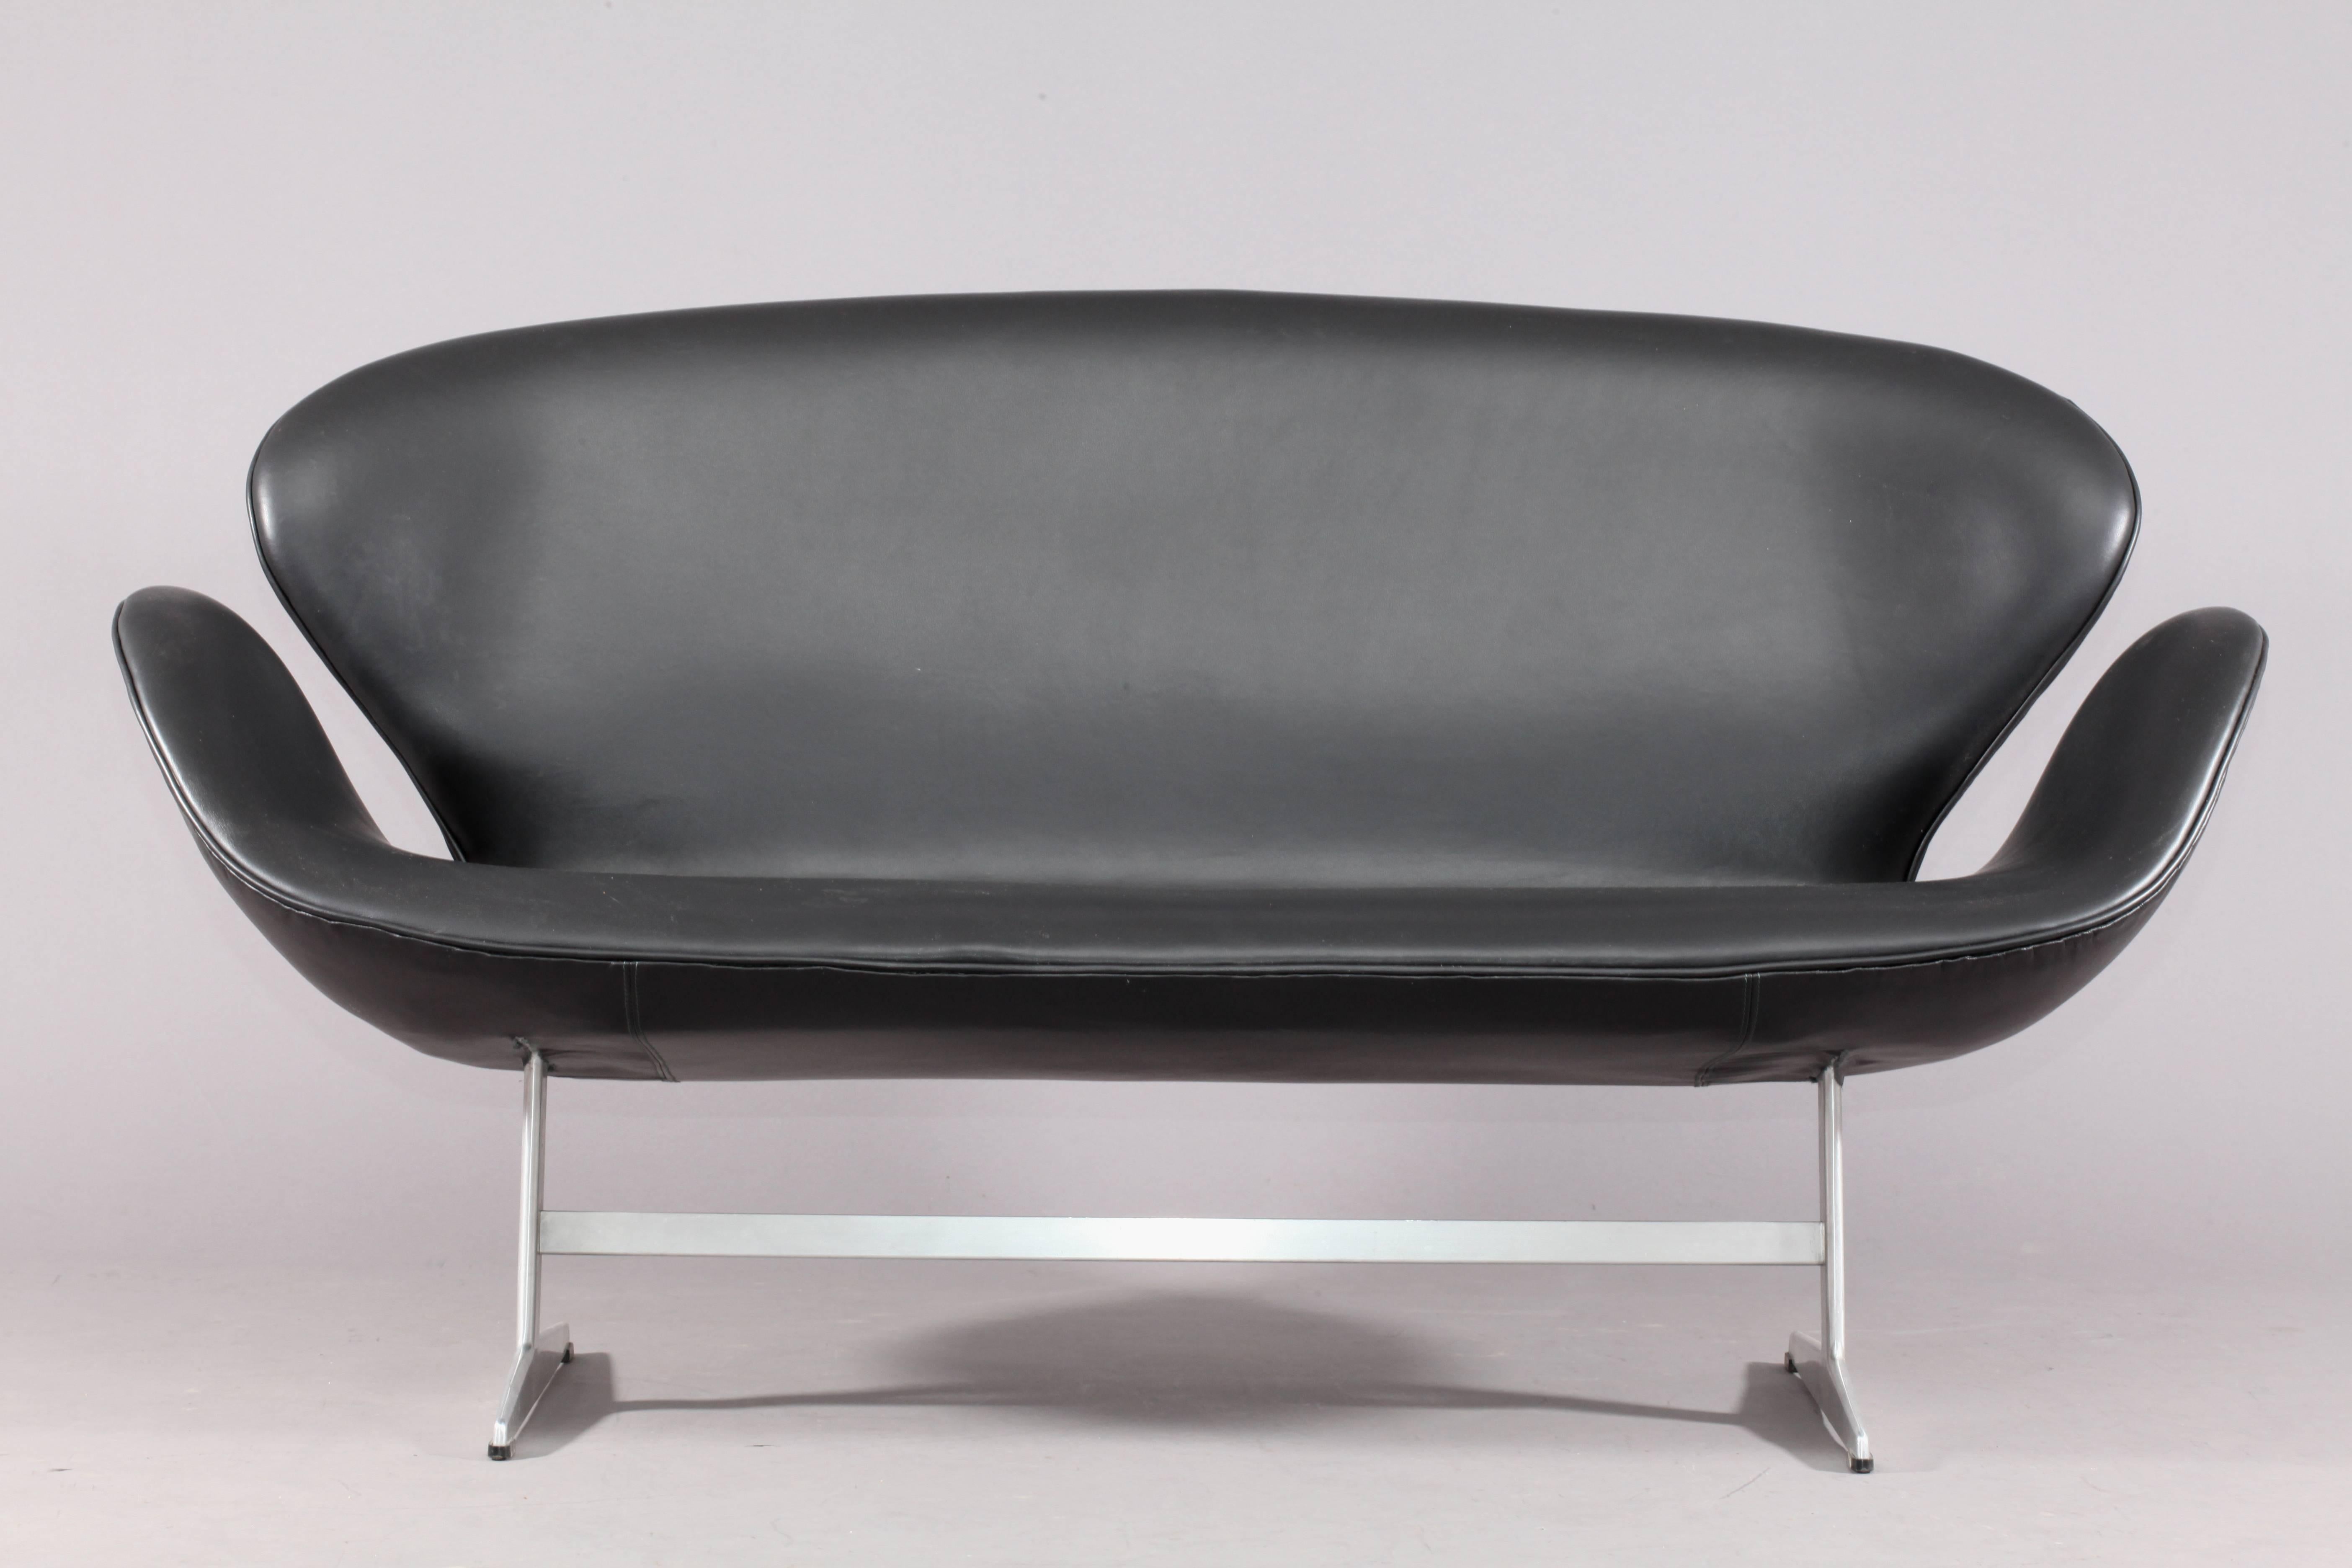 Swan sofa,
Arne Jacobsen
Manufacture Fritz Hansen
Denmark, 1970
Black leather
alu base
Measures: Width 56